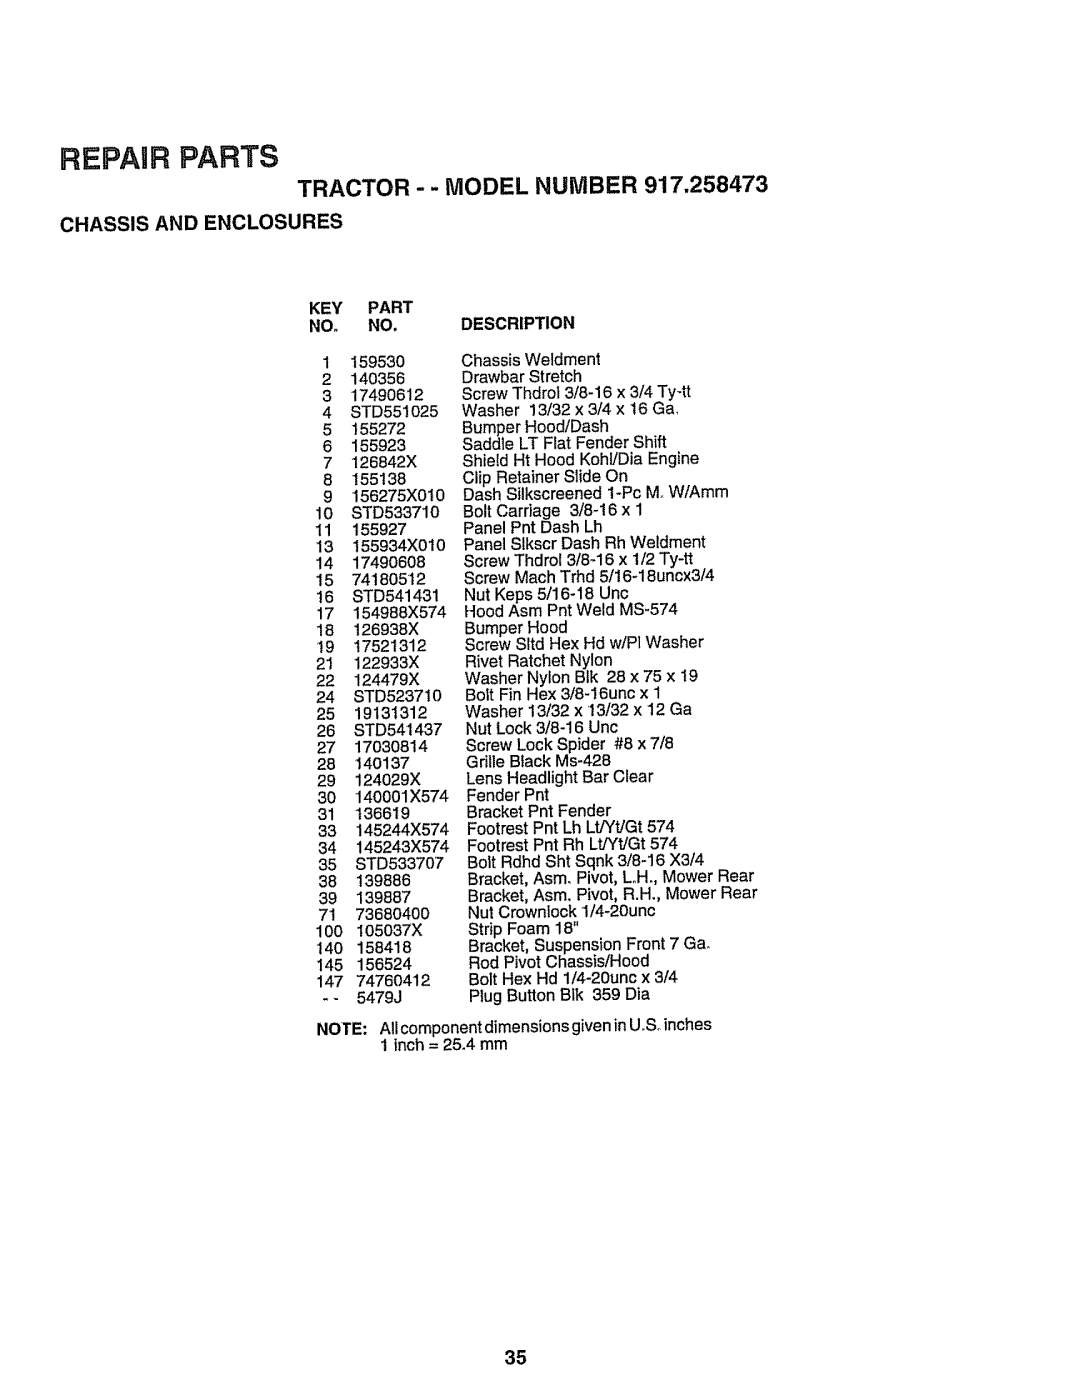 Sears 917.258473 Repair Parts, Tractor - - Model Number, Chassis And Enclosures, Key Part No. No. Description, 74180512 